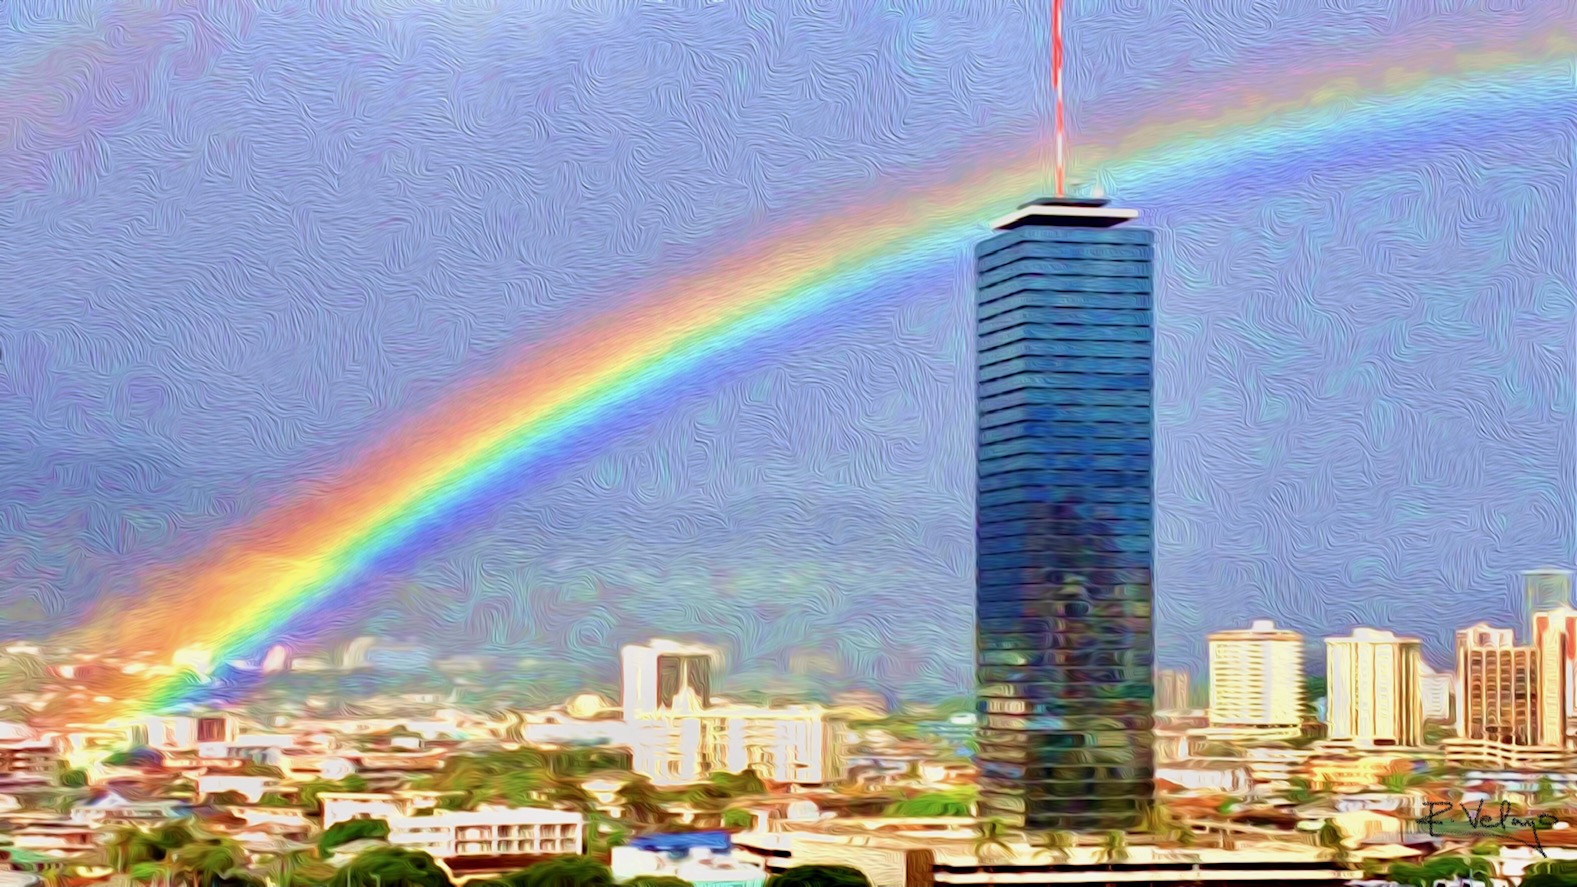 "RAINBOW OVERLOOKING CENTURY CENTER BUILDING IN HONOLULU" [Created: 2/12/2021]